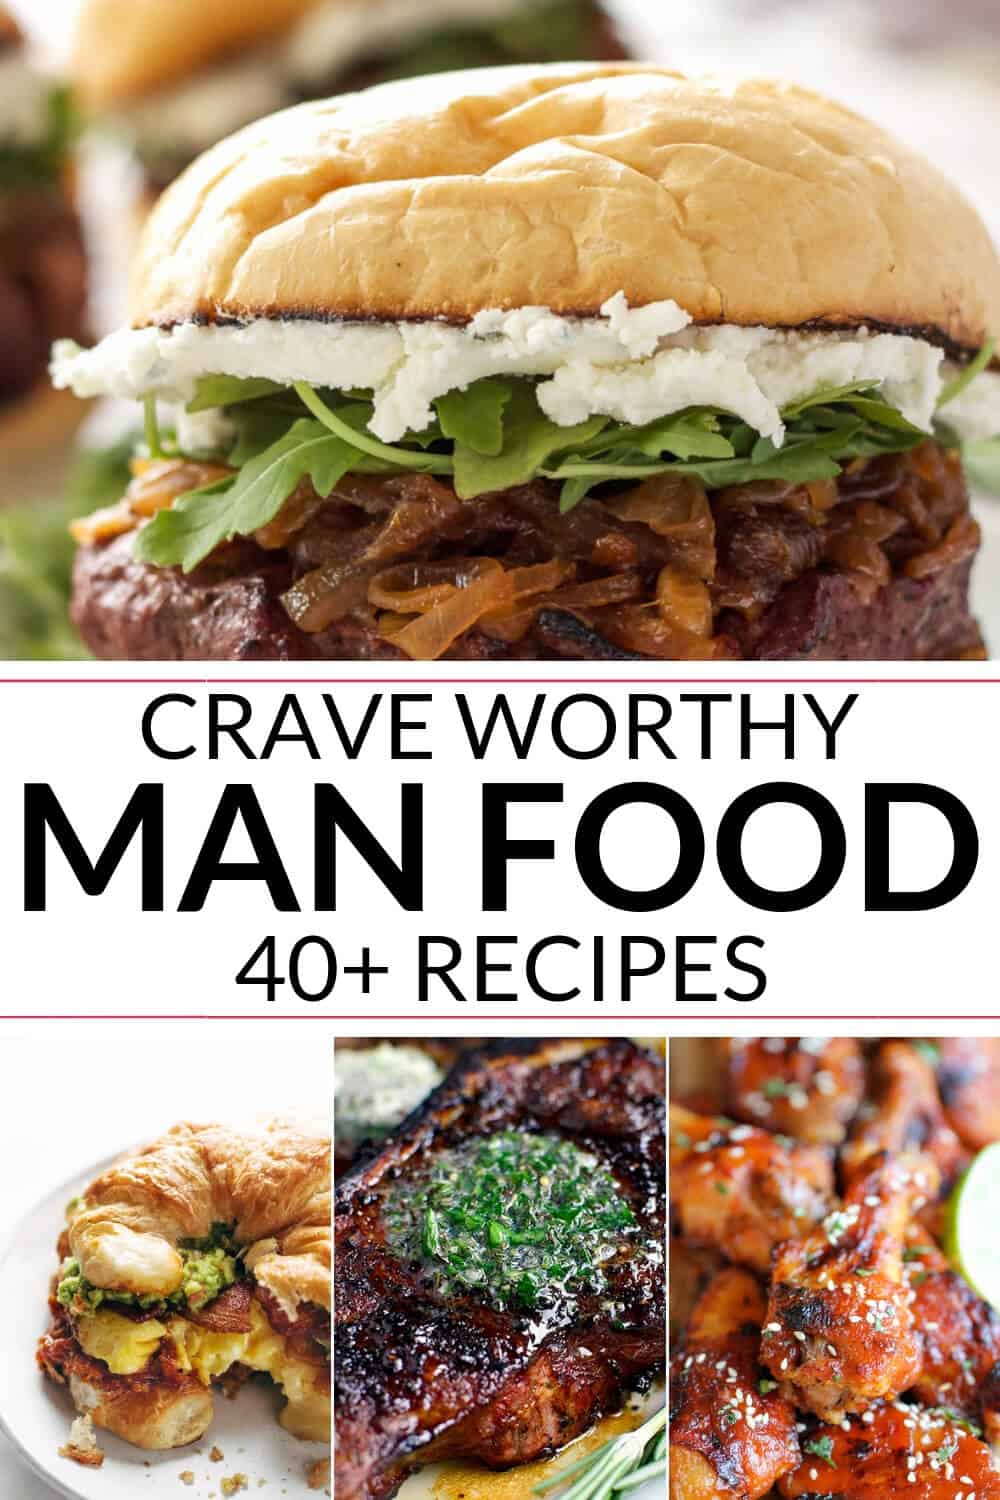 Crave worthy man food